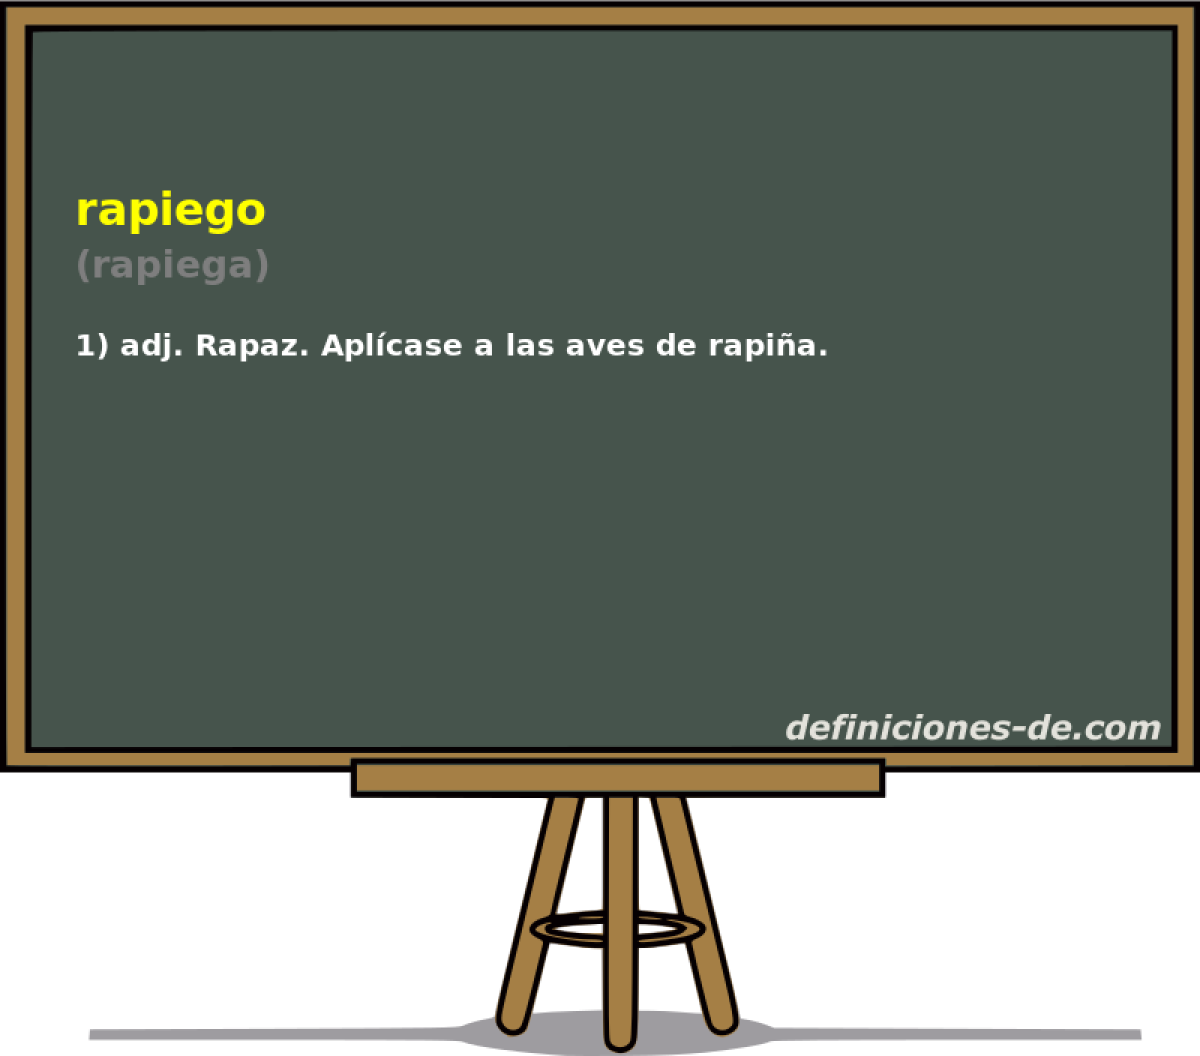 rapiego (rapiega)